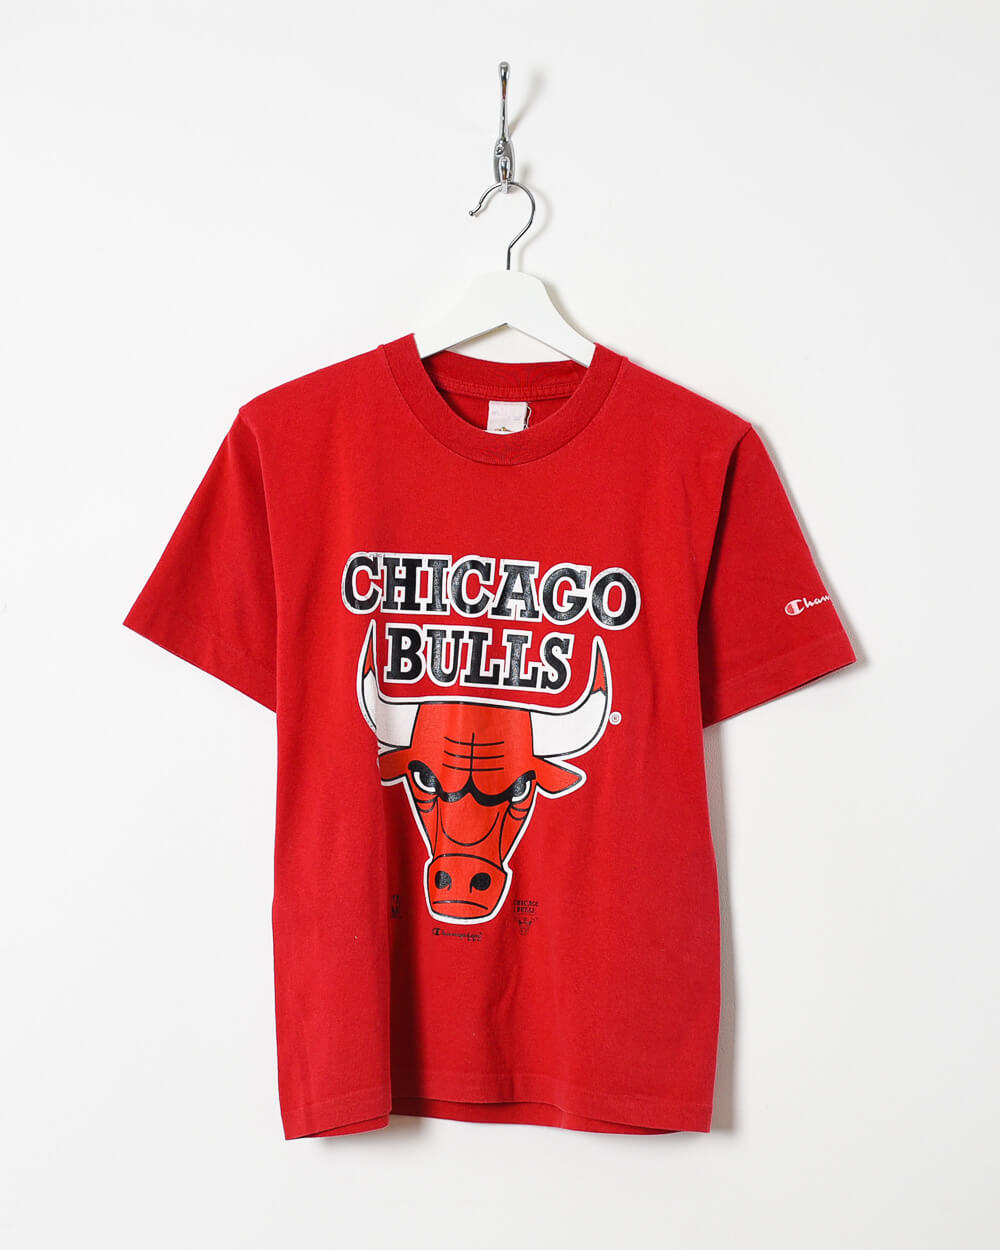 Vintage Long Gone NBA Chicago Bulls Champs Sweatshirt sz L